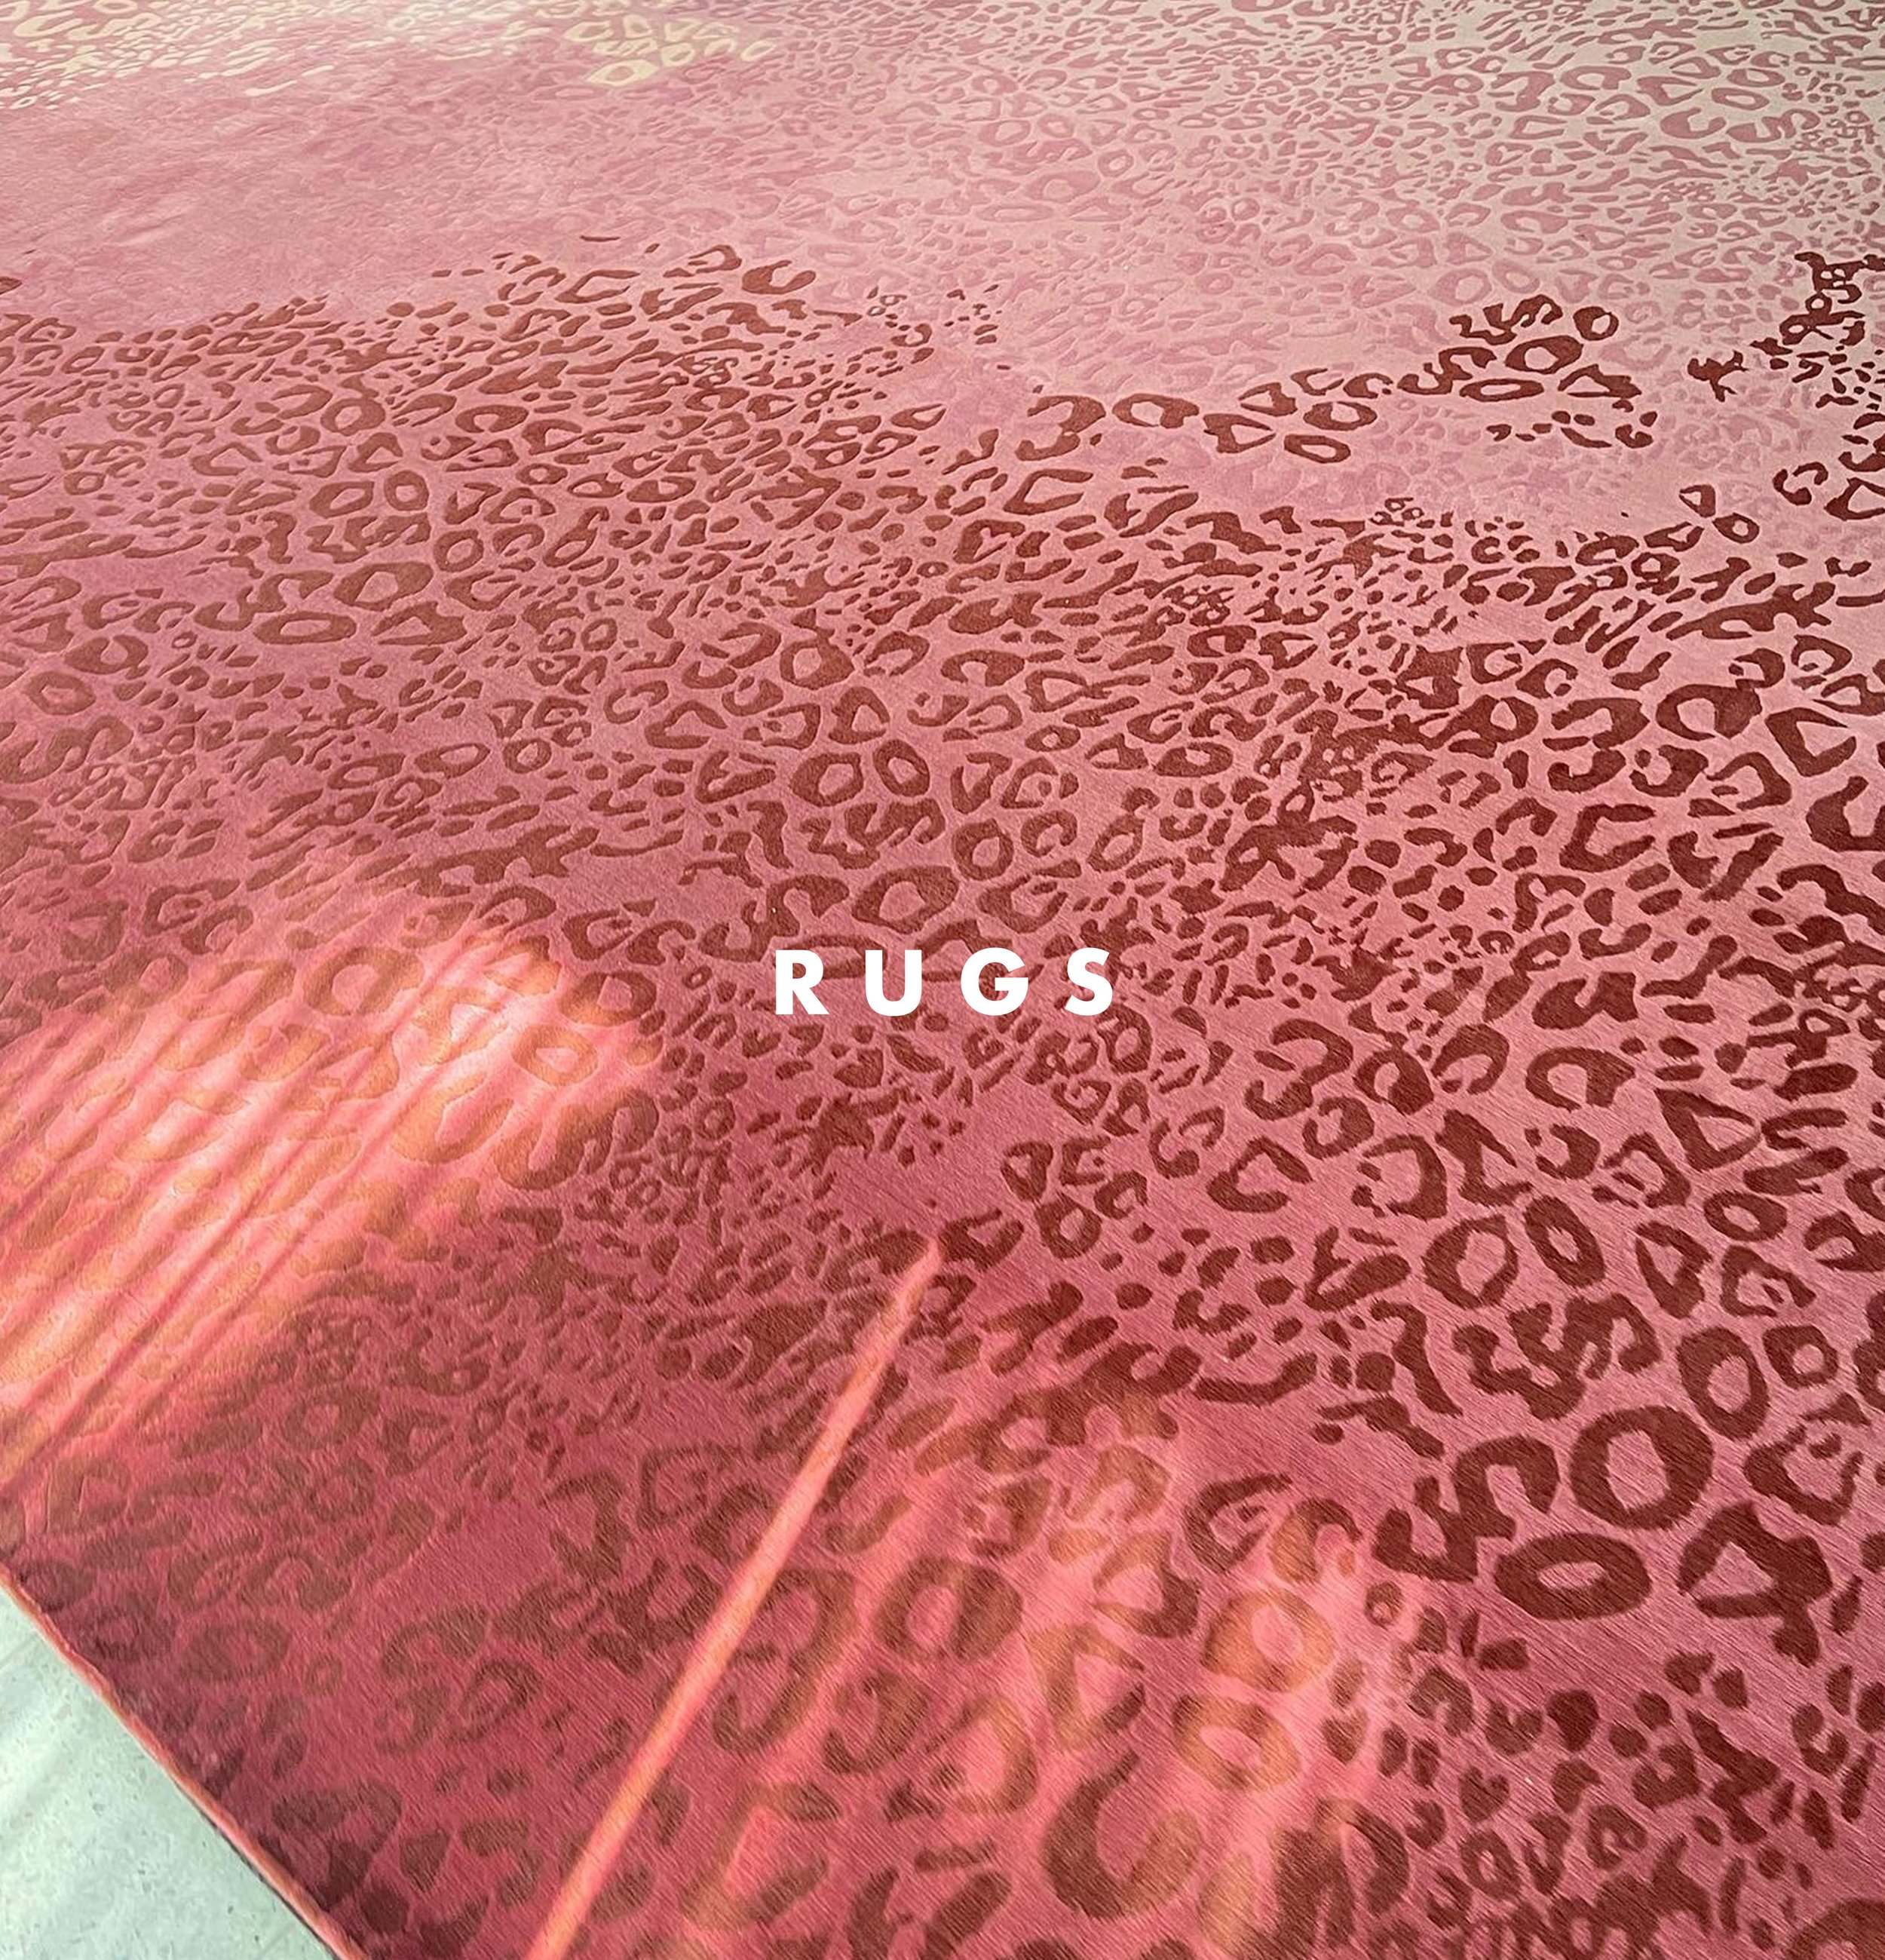 rugs_Candicekayedesign.jpg